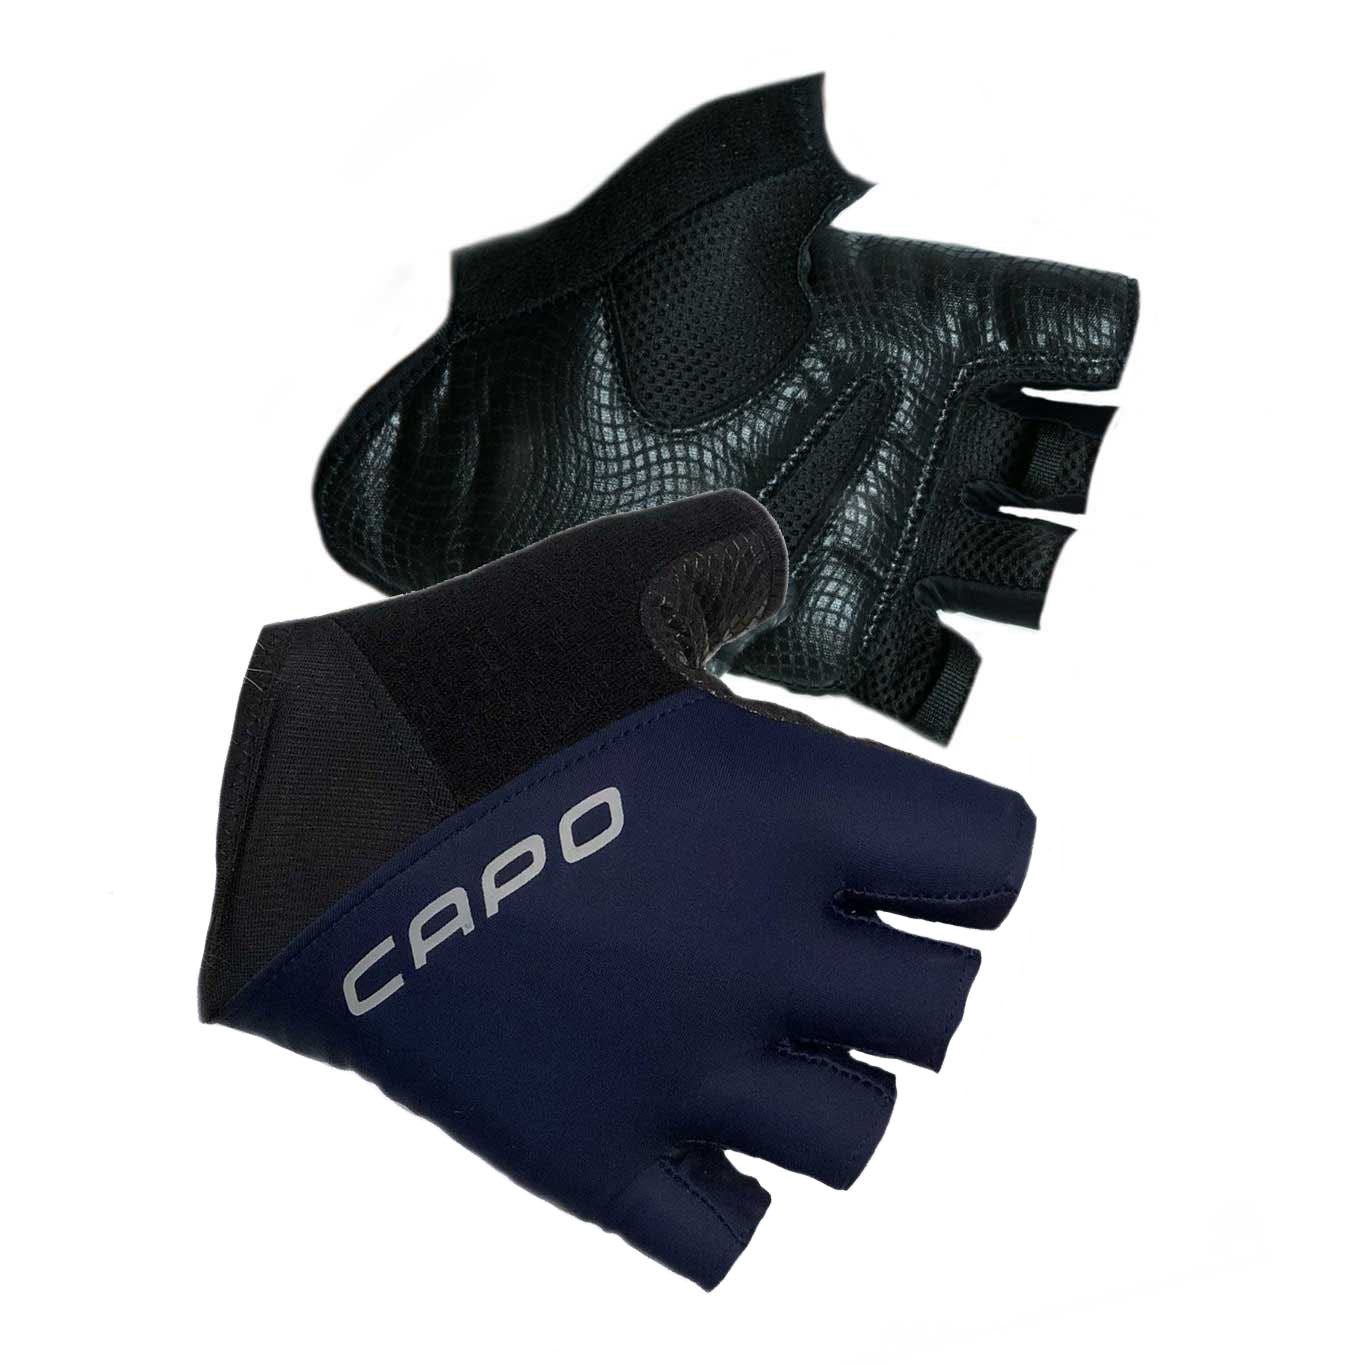 Capo SC Race Gloves - Navy